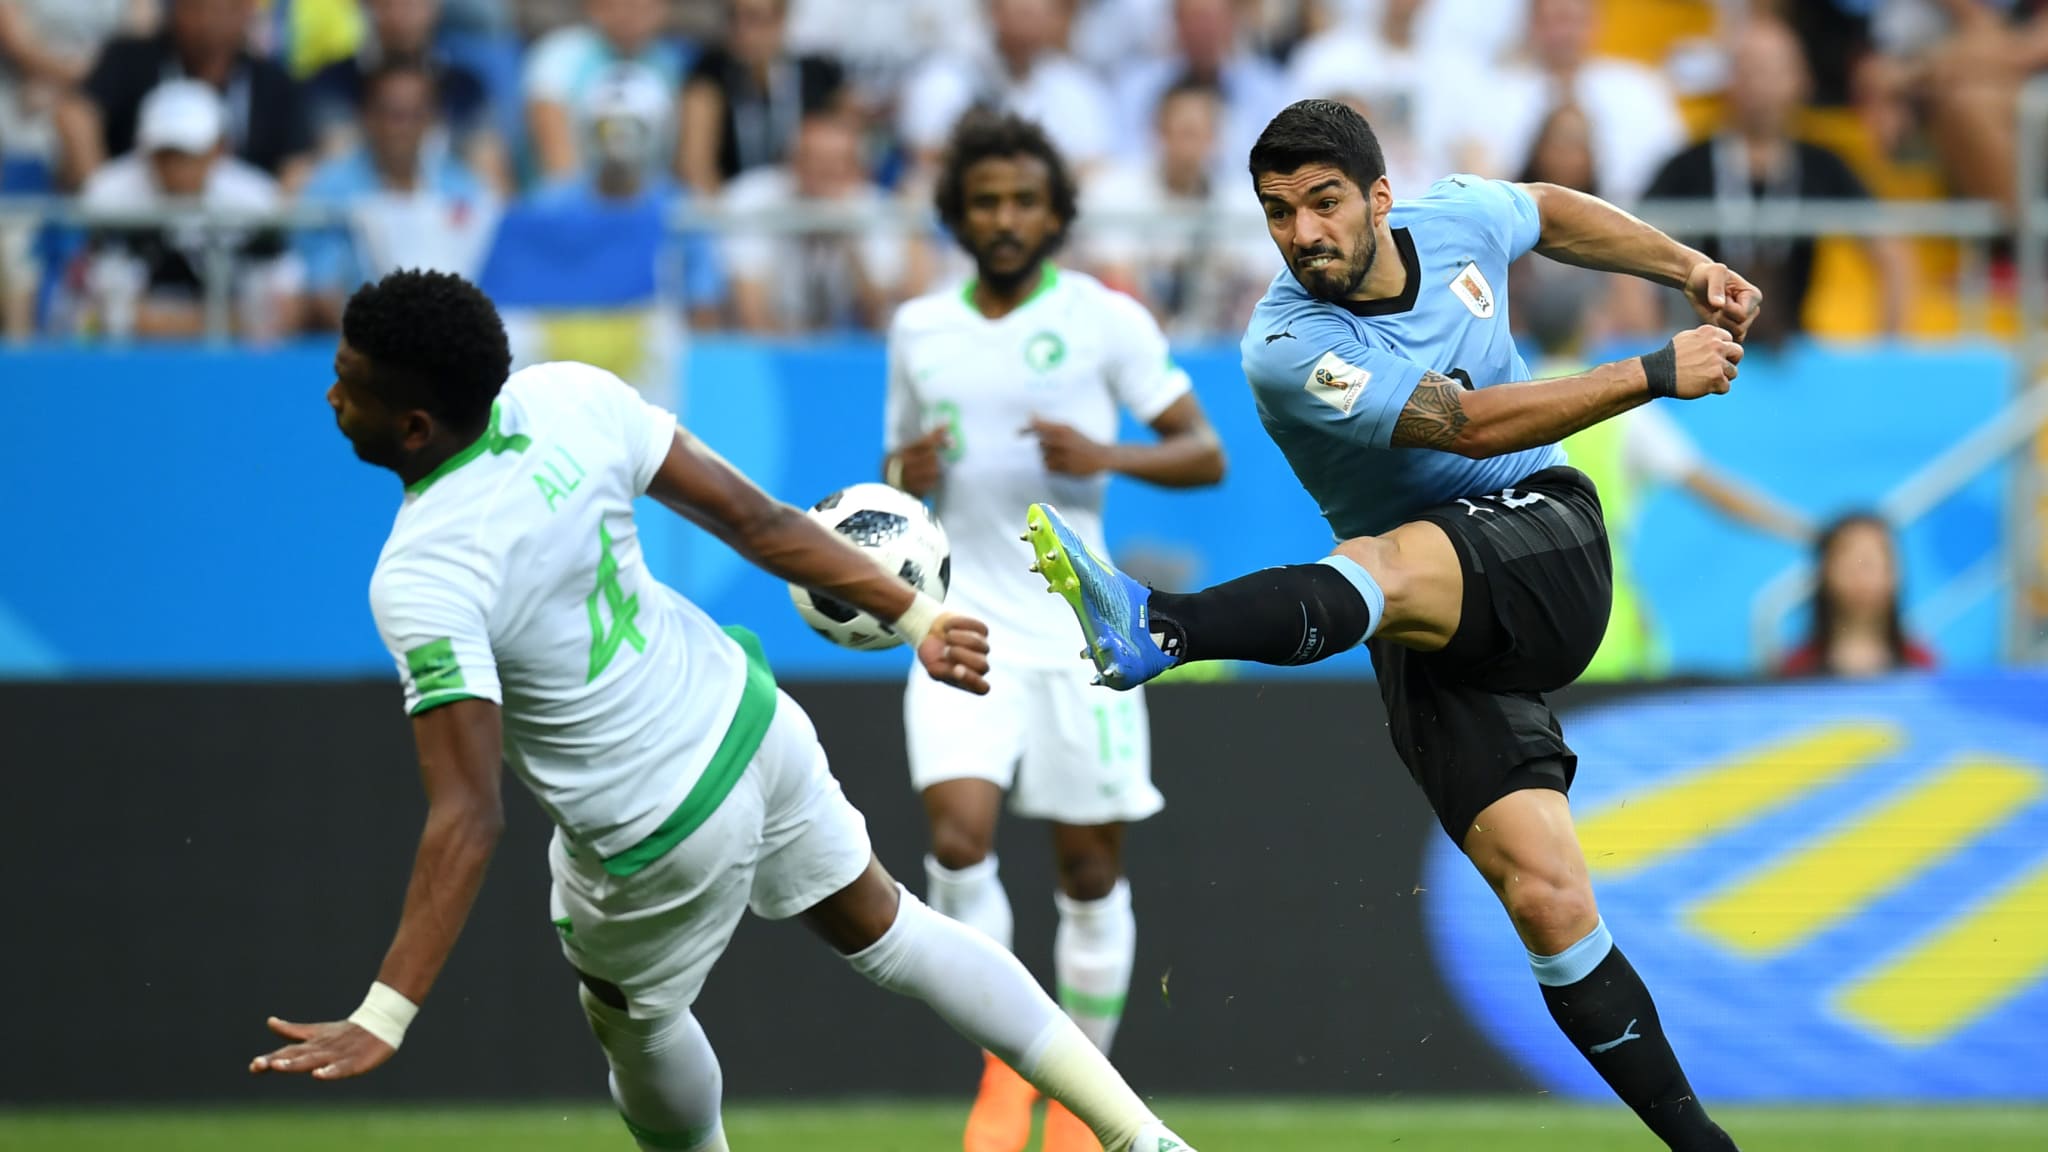 TENDANGAN. Luis Suarez (Uruguay) melepas tendangan melawan tim Arab Saudi di pertandingan Grup A Piala Dunia, Rabu, 20 Juni. Foto dari FIFA.com 